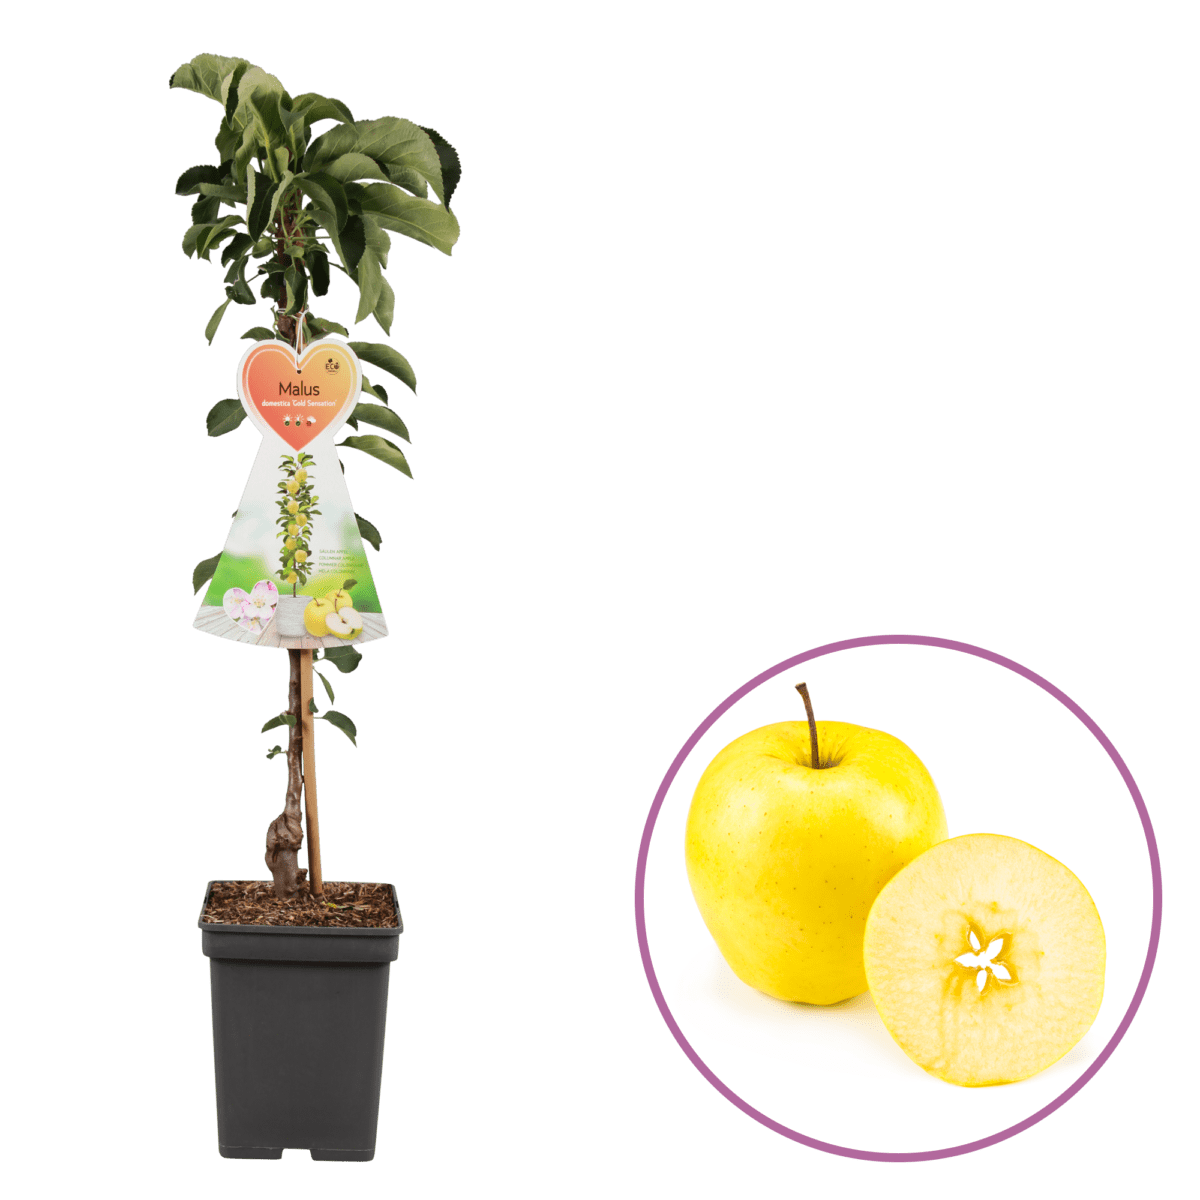 boskoopsefruitbomen | appelboom met losse appel